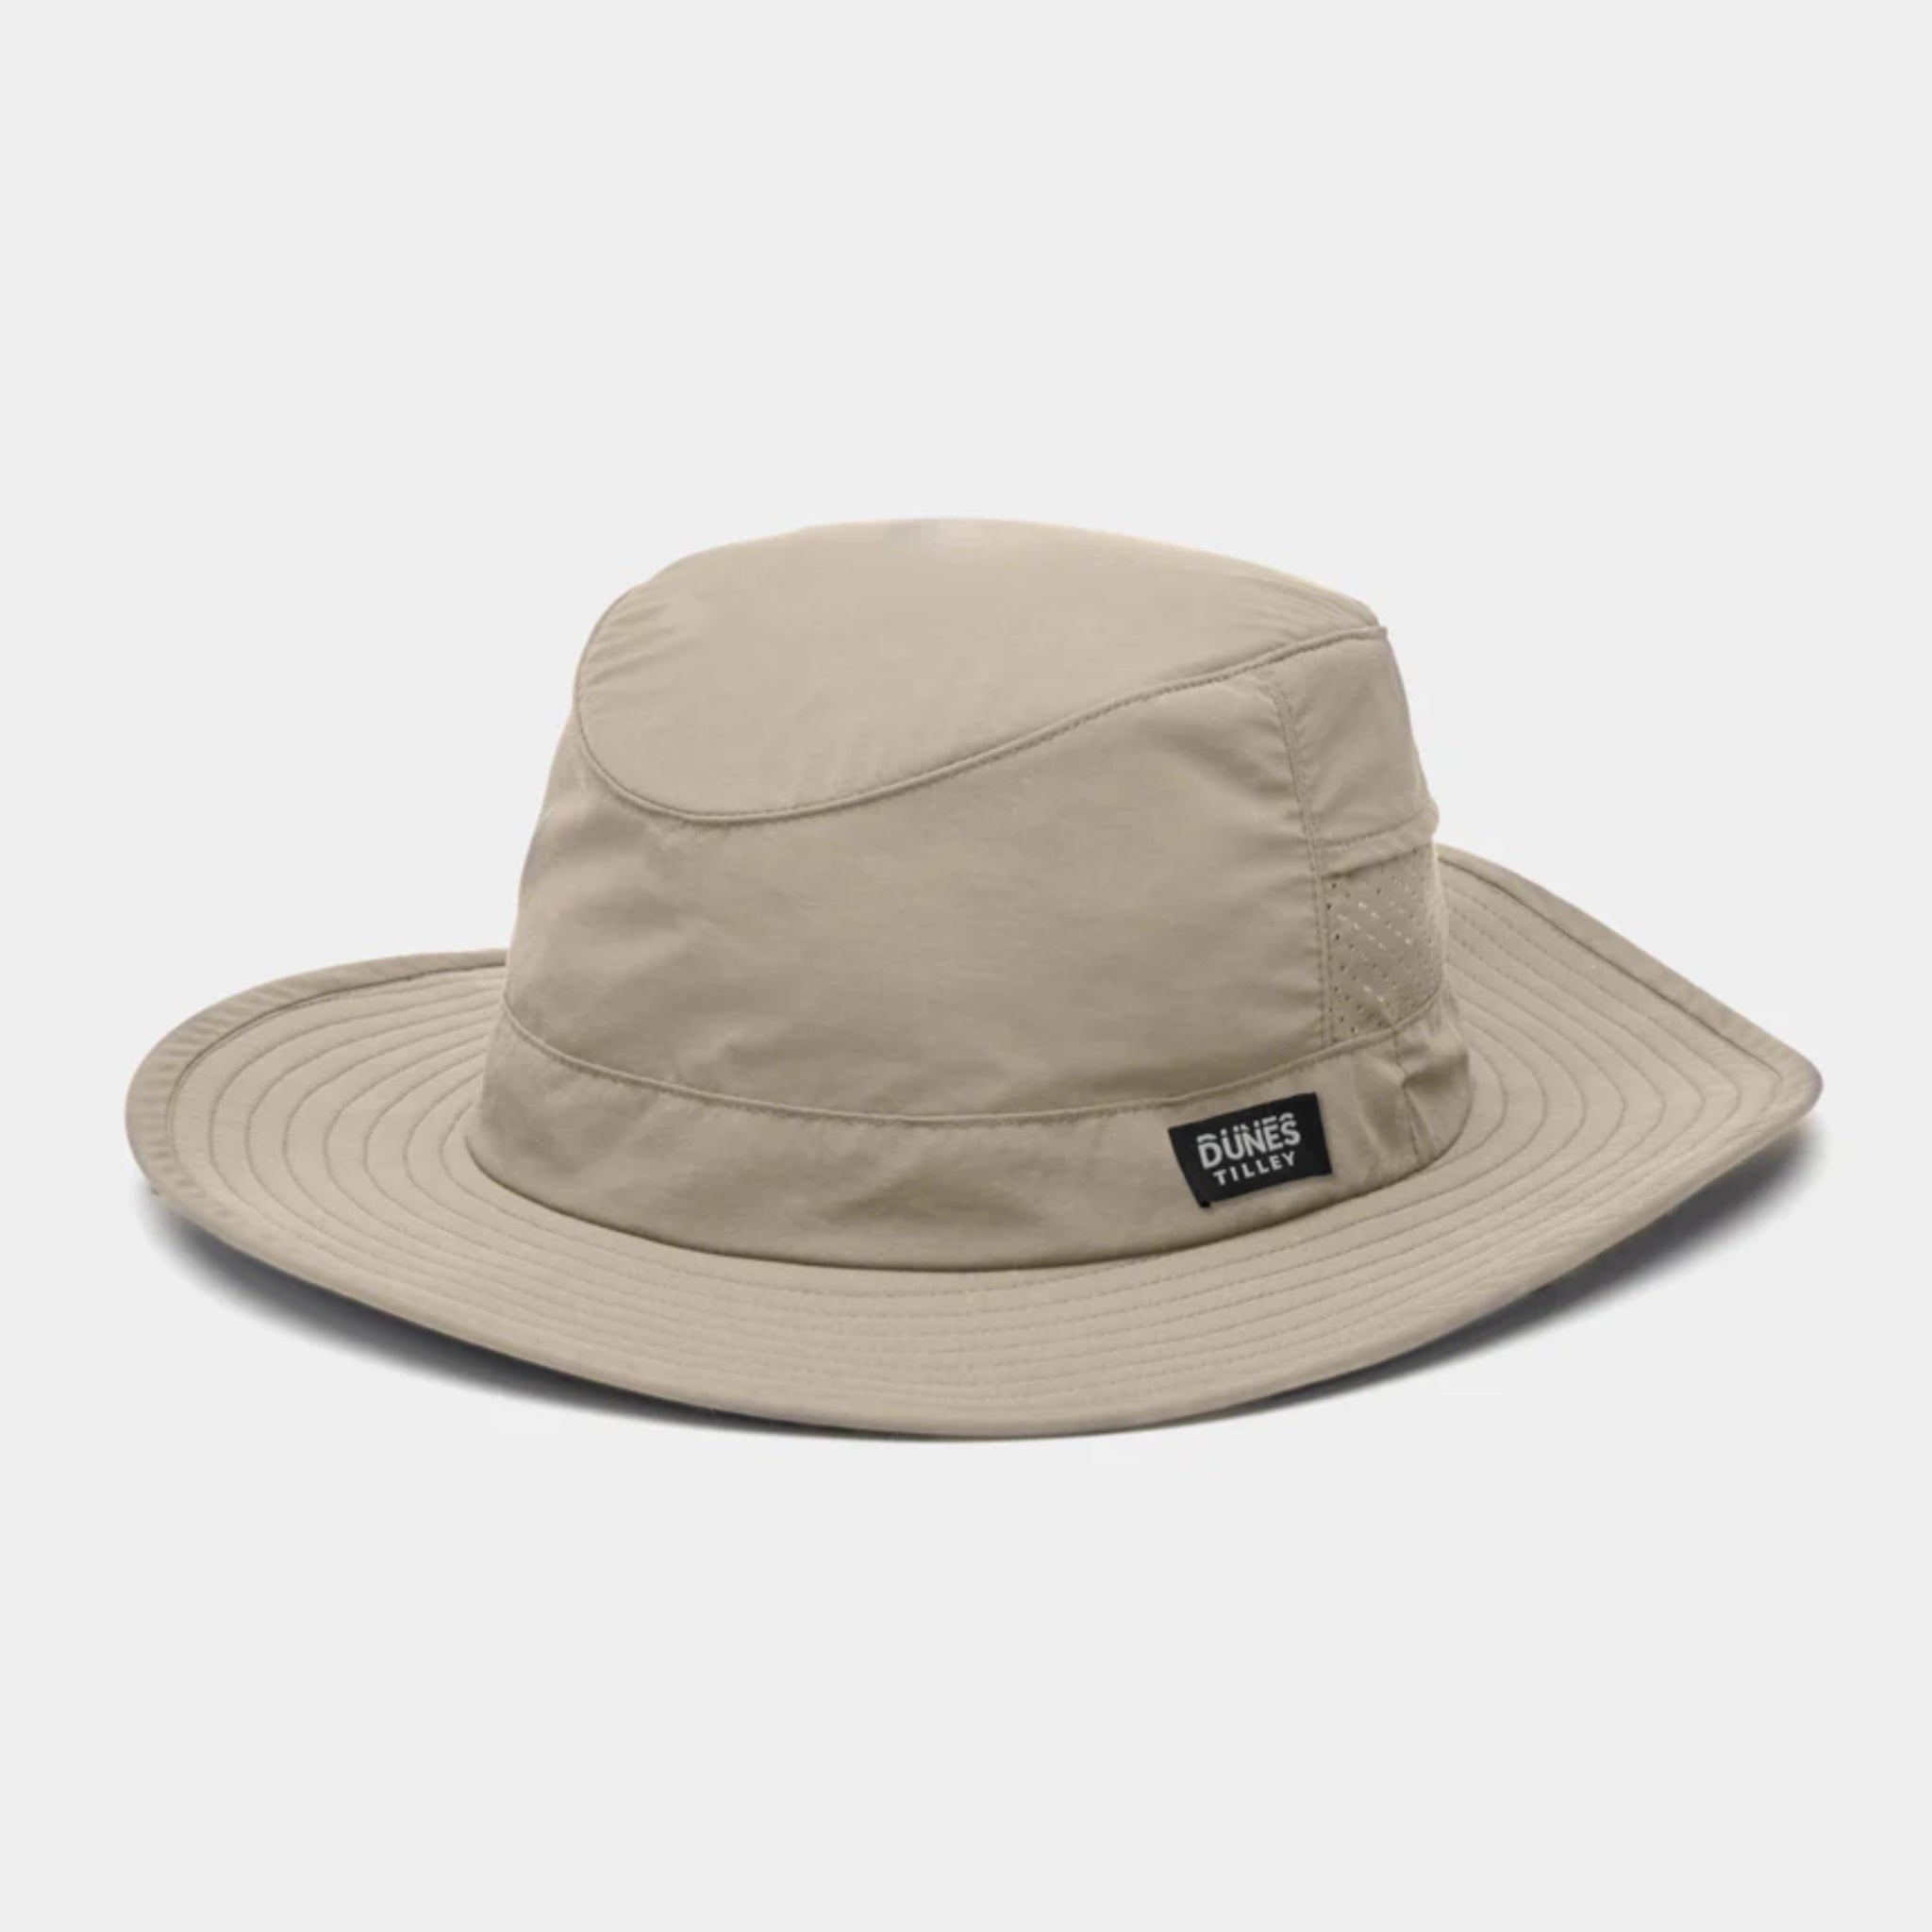 The Hat Shop Tilley 'Dunes' Explorer Sun Hat UPF50+ Sand